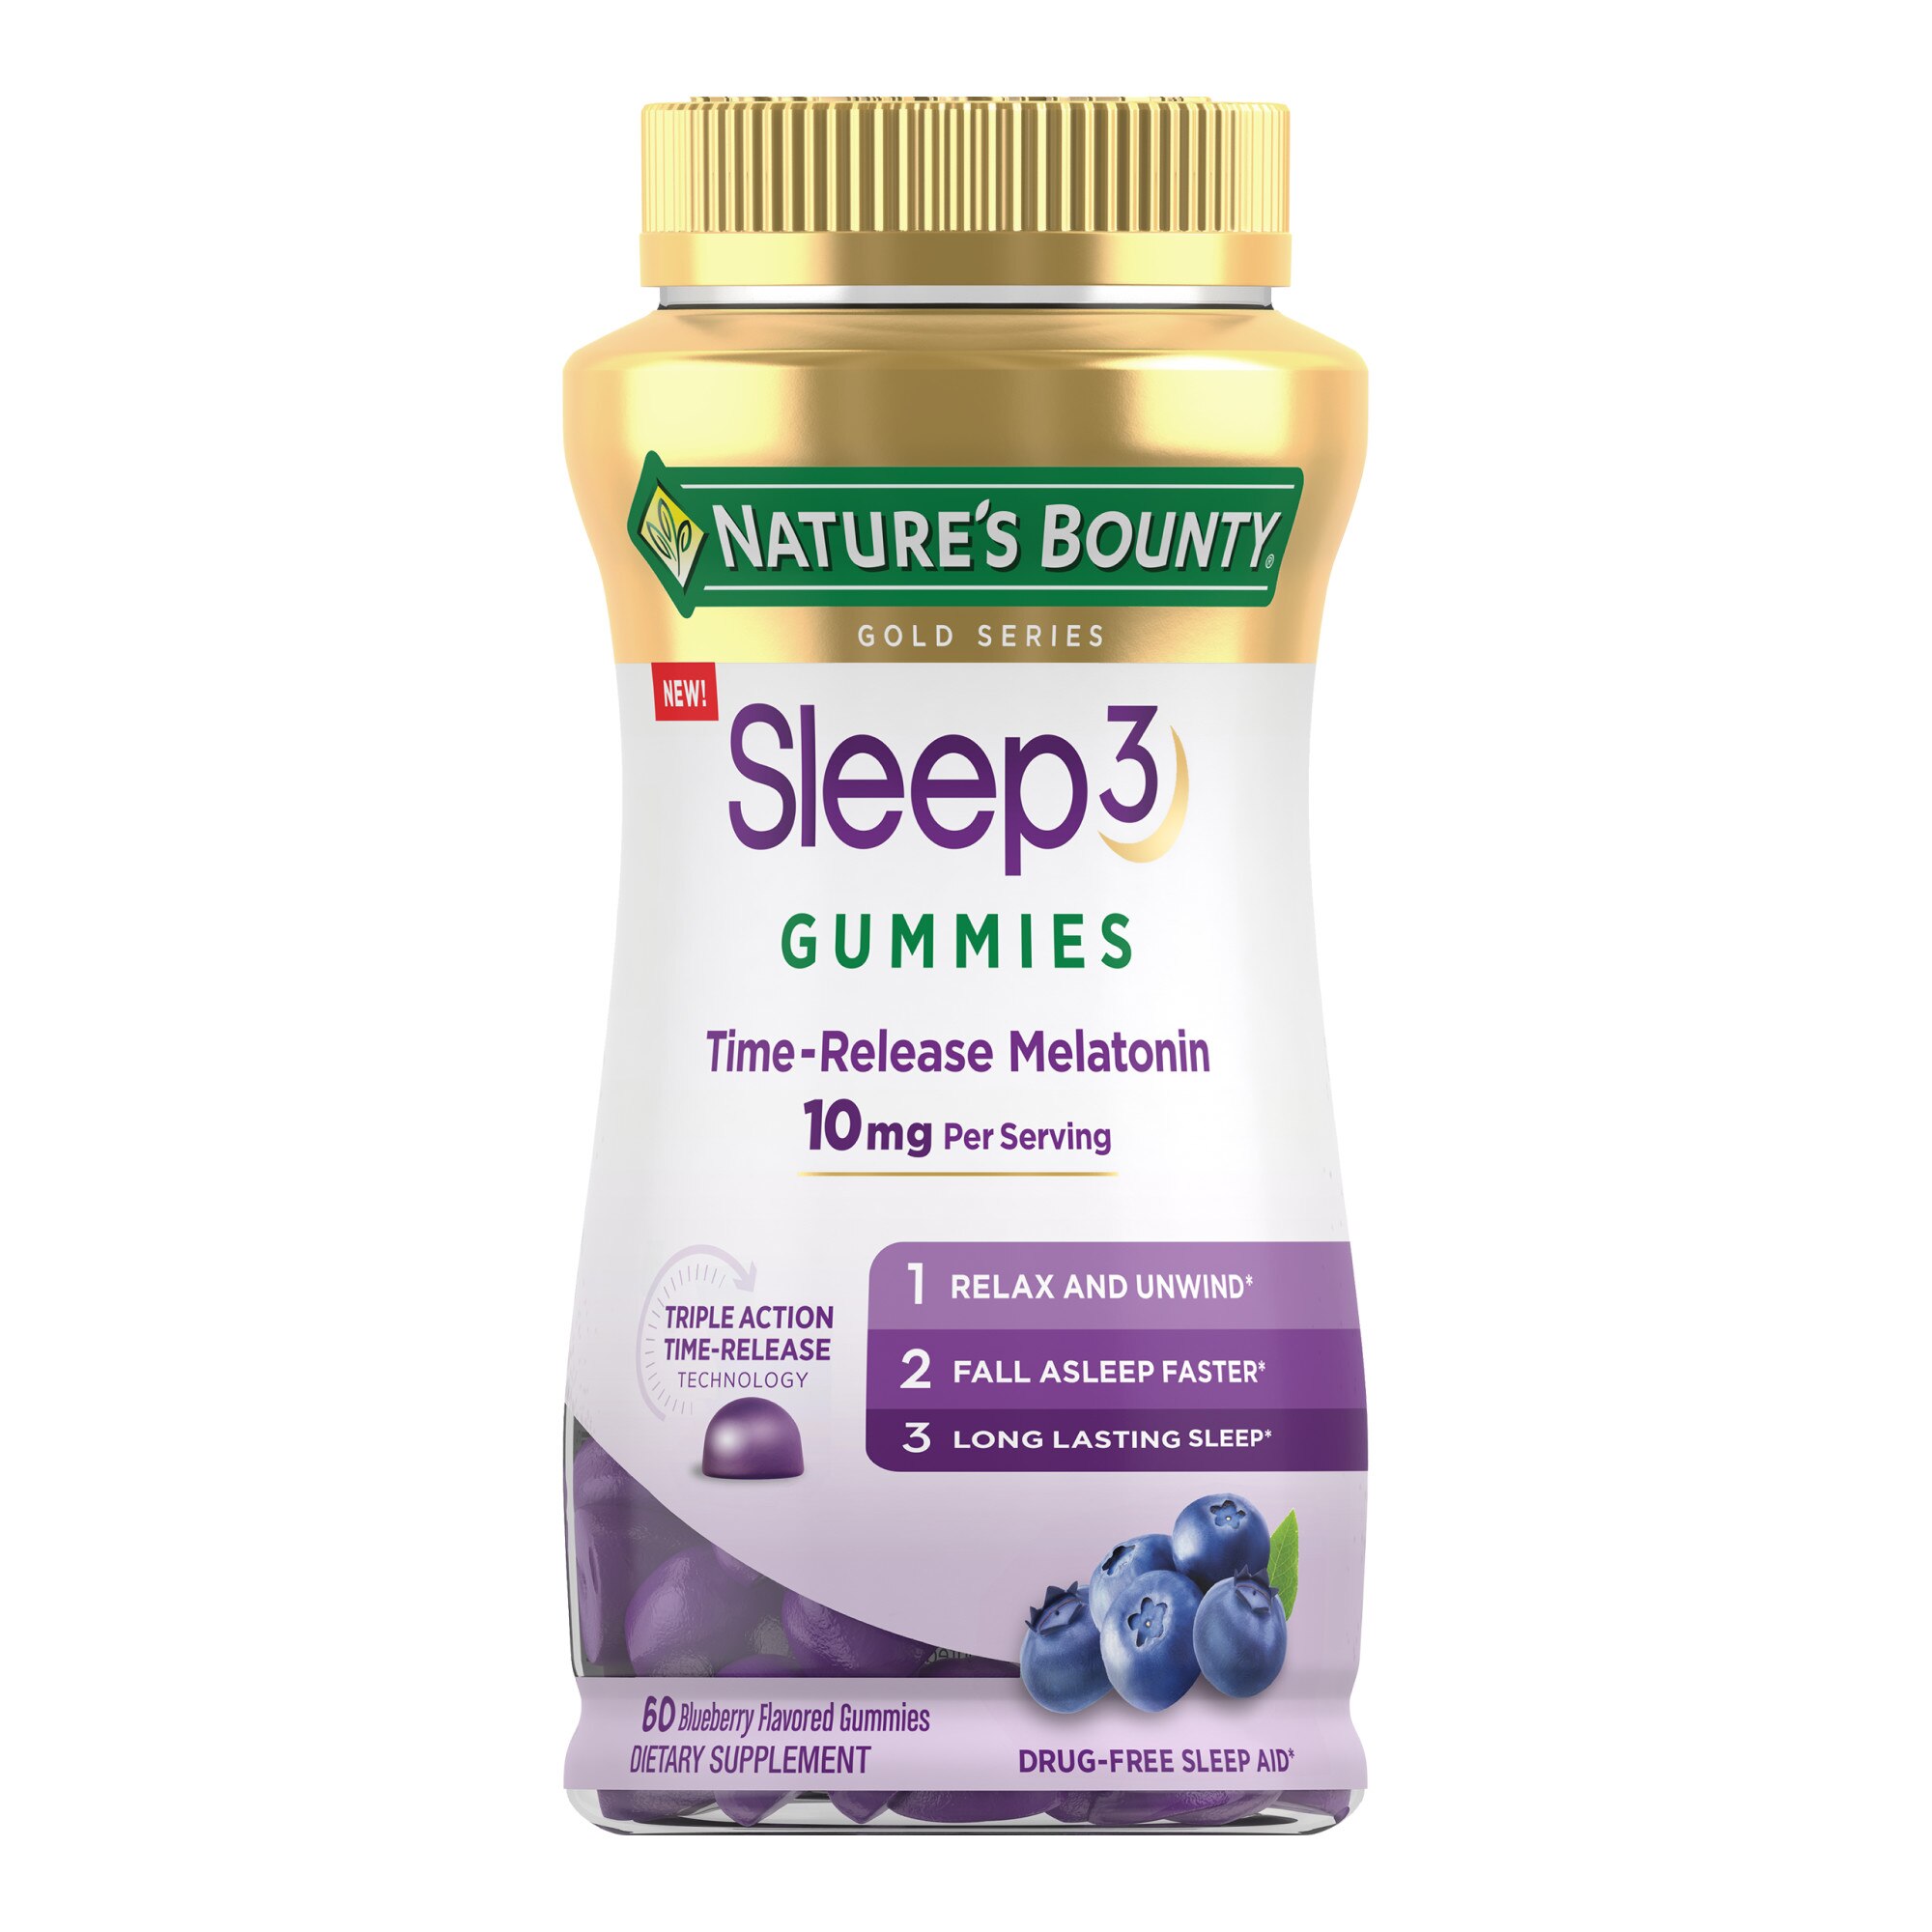 Nature's Bounty Sleep3 Gummies, 10mg Melatonin, Drug-Free Sleep Aid, 60 CT